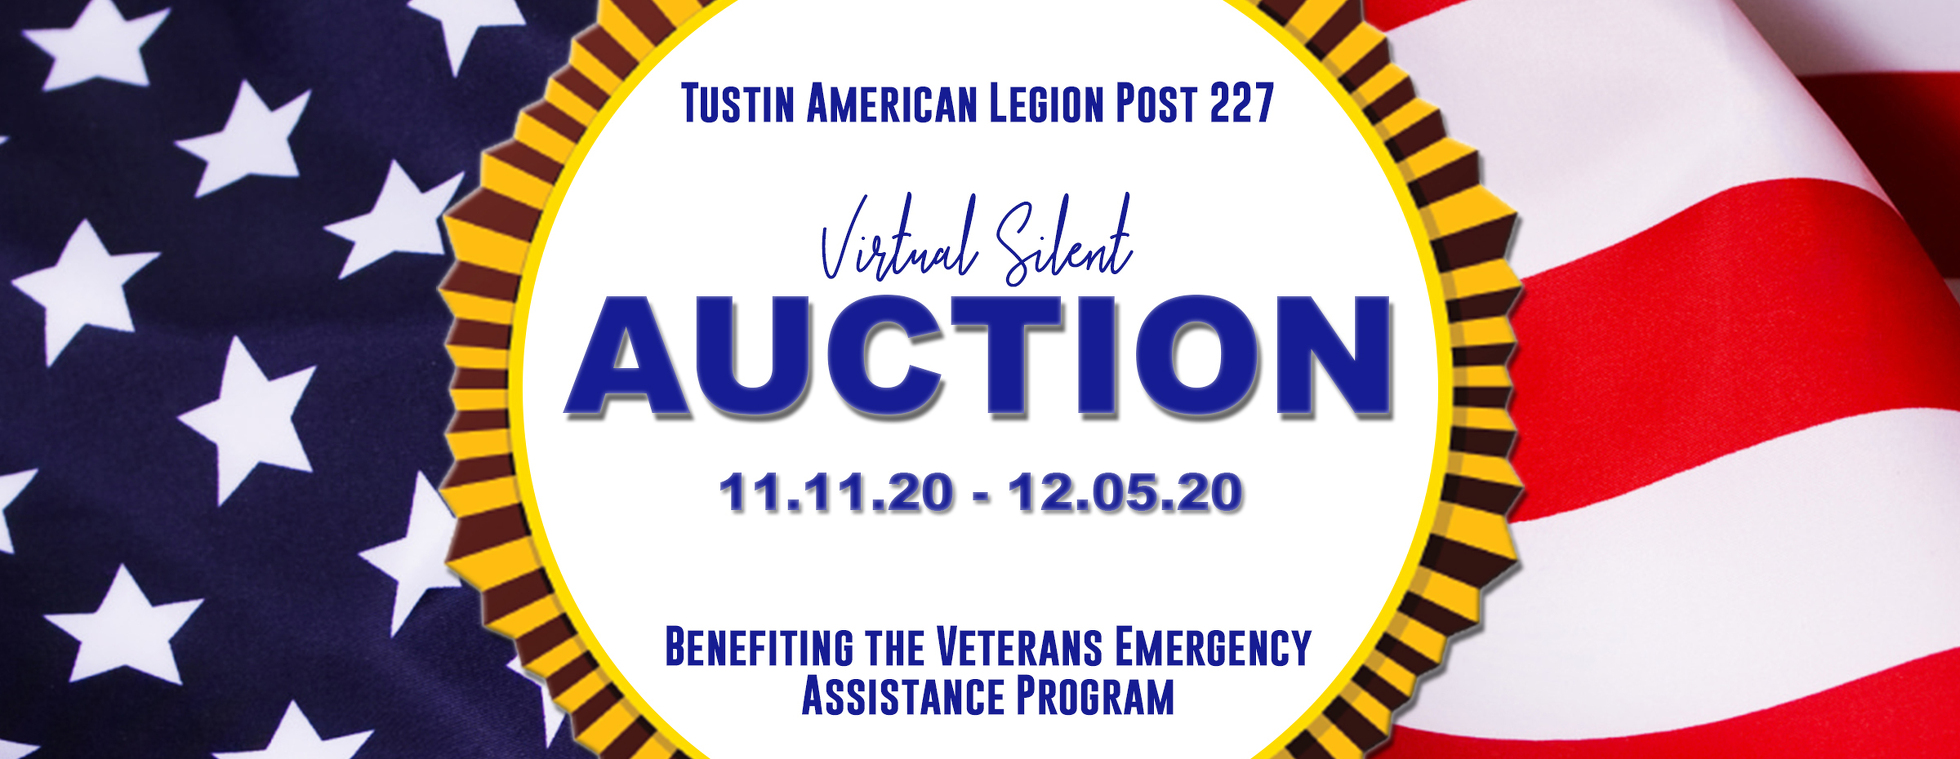 Tustin American Legion Post 227 Virtual Silent Auction